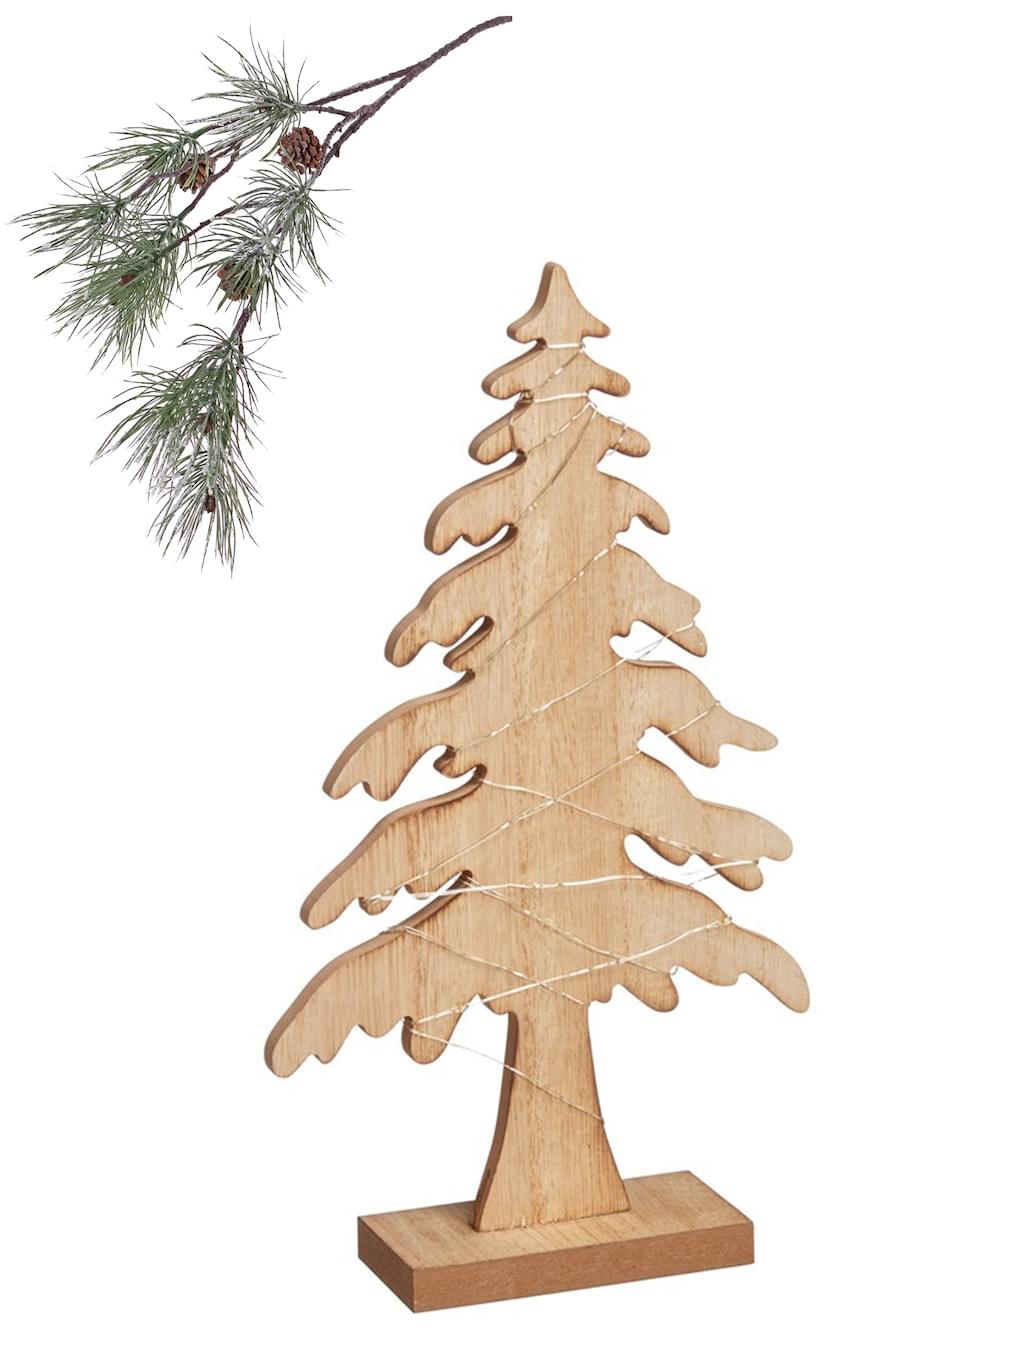 kerst-decoratie-accessoires-kerstboom-lichtjes-hout-Kwantum